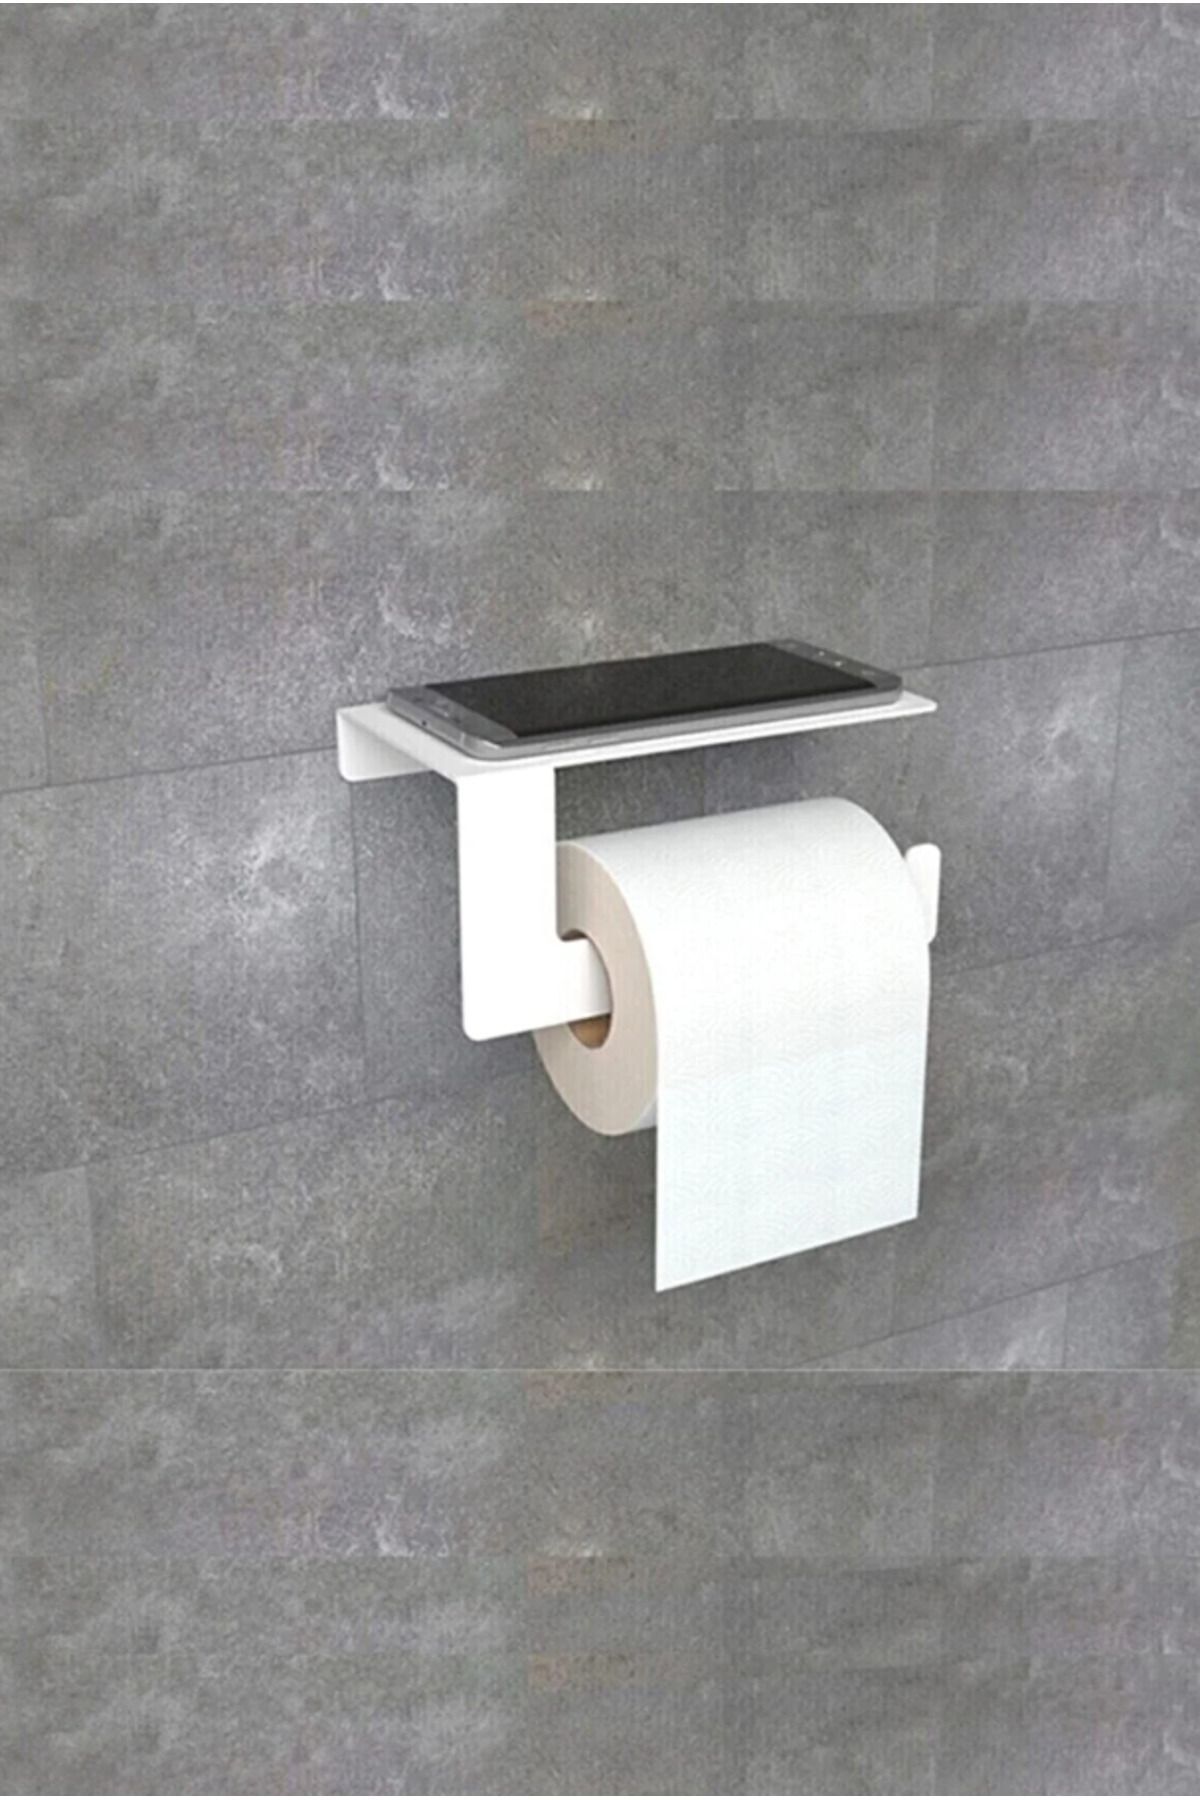 valör tasarım Metal Beyaz Tuvalet Kağıtlık-tuvalet Kağıdı Askısı-tuvalet Kağıtlığı VALÖR TASARIM